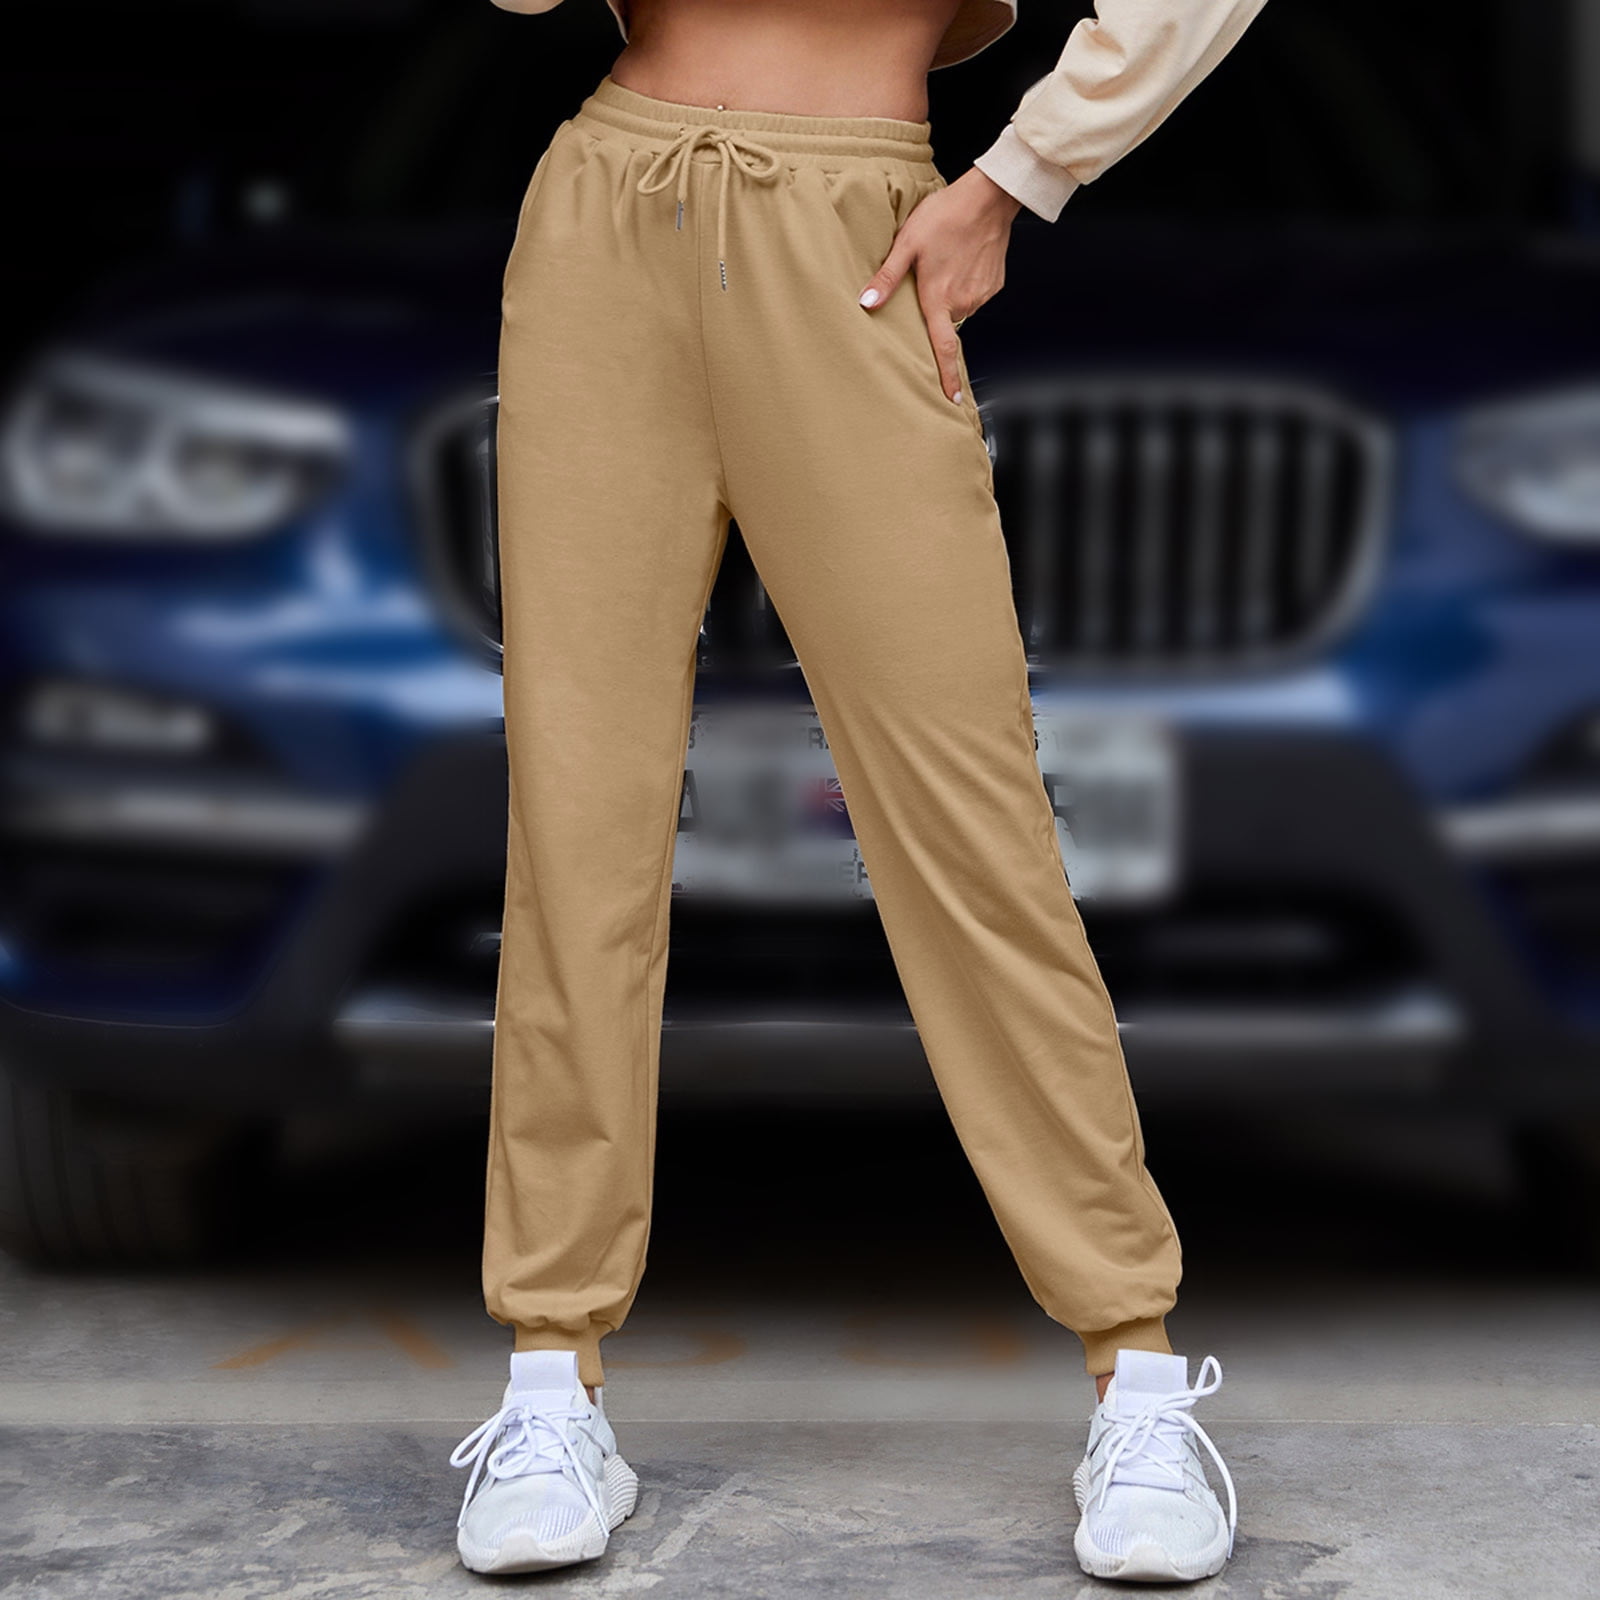 Aayomet Dress Pants Women Soft Solid Soft Stretch Women's Lightweight  Sweatpants Pockets Pants Harem Pants for Women,Brown M 